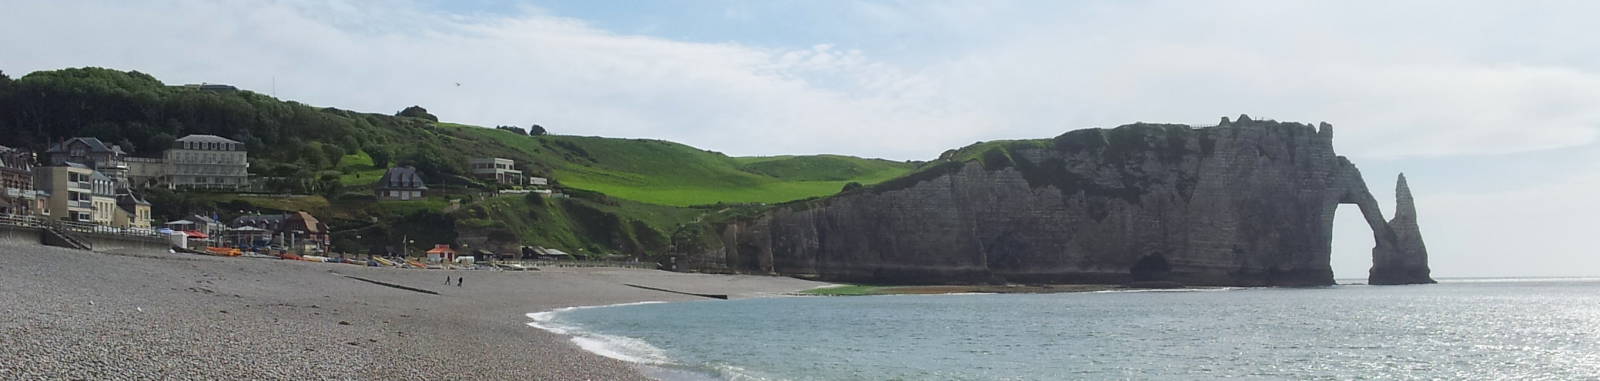 Eroded cliffs on the Normandy coastline at Étretat, France.